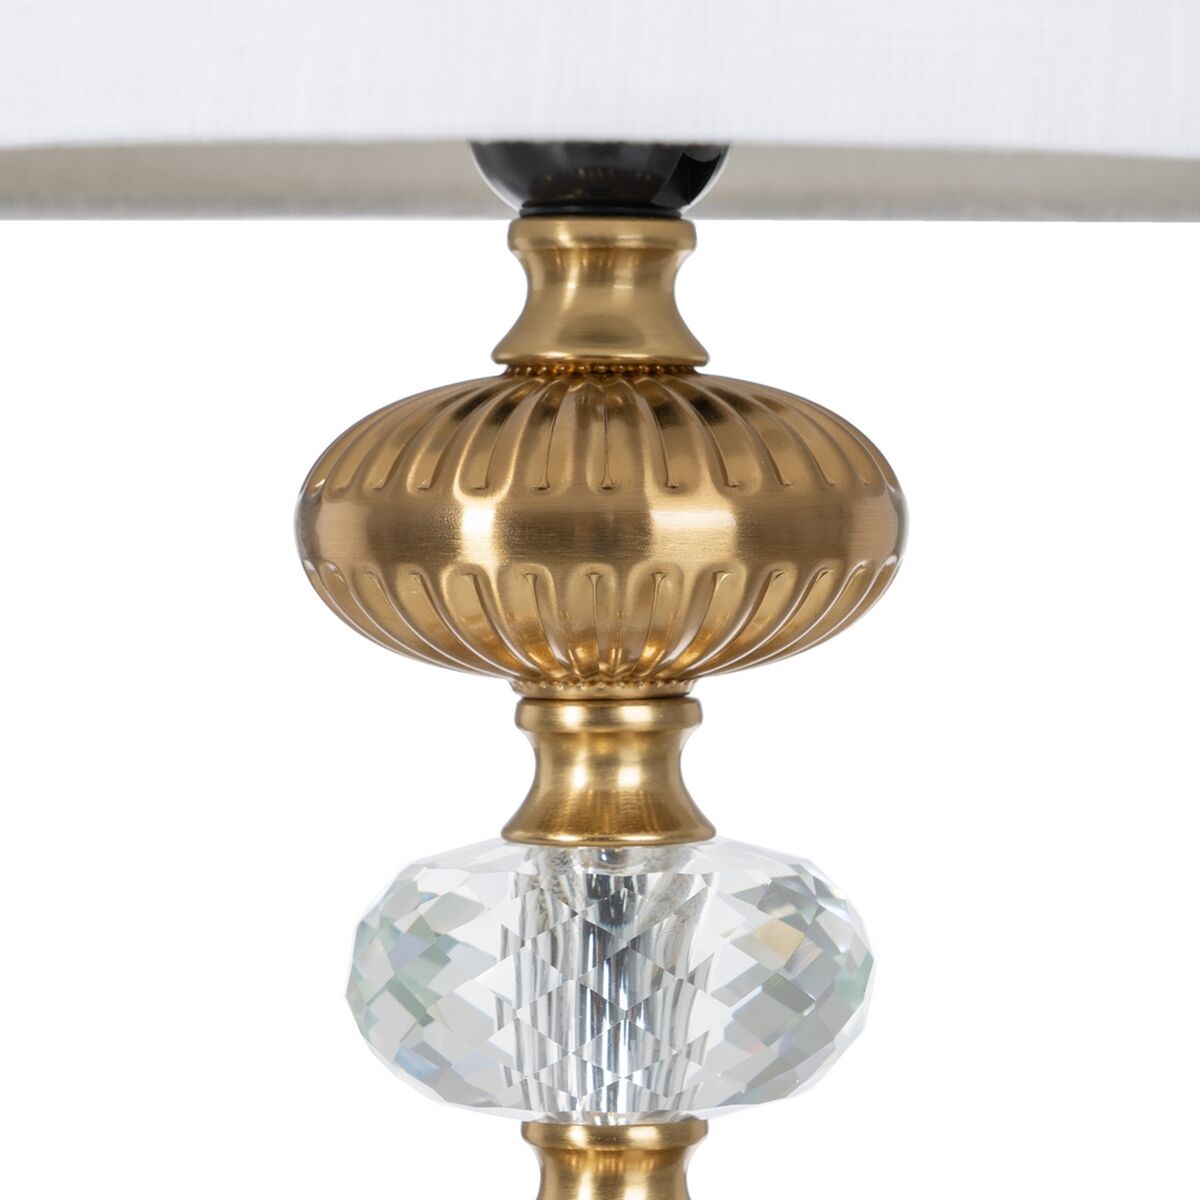 Table lamp golden metal chiq design